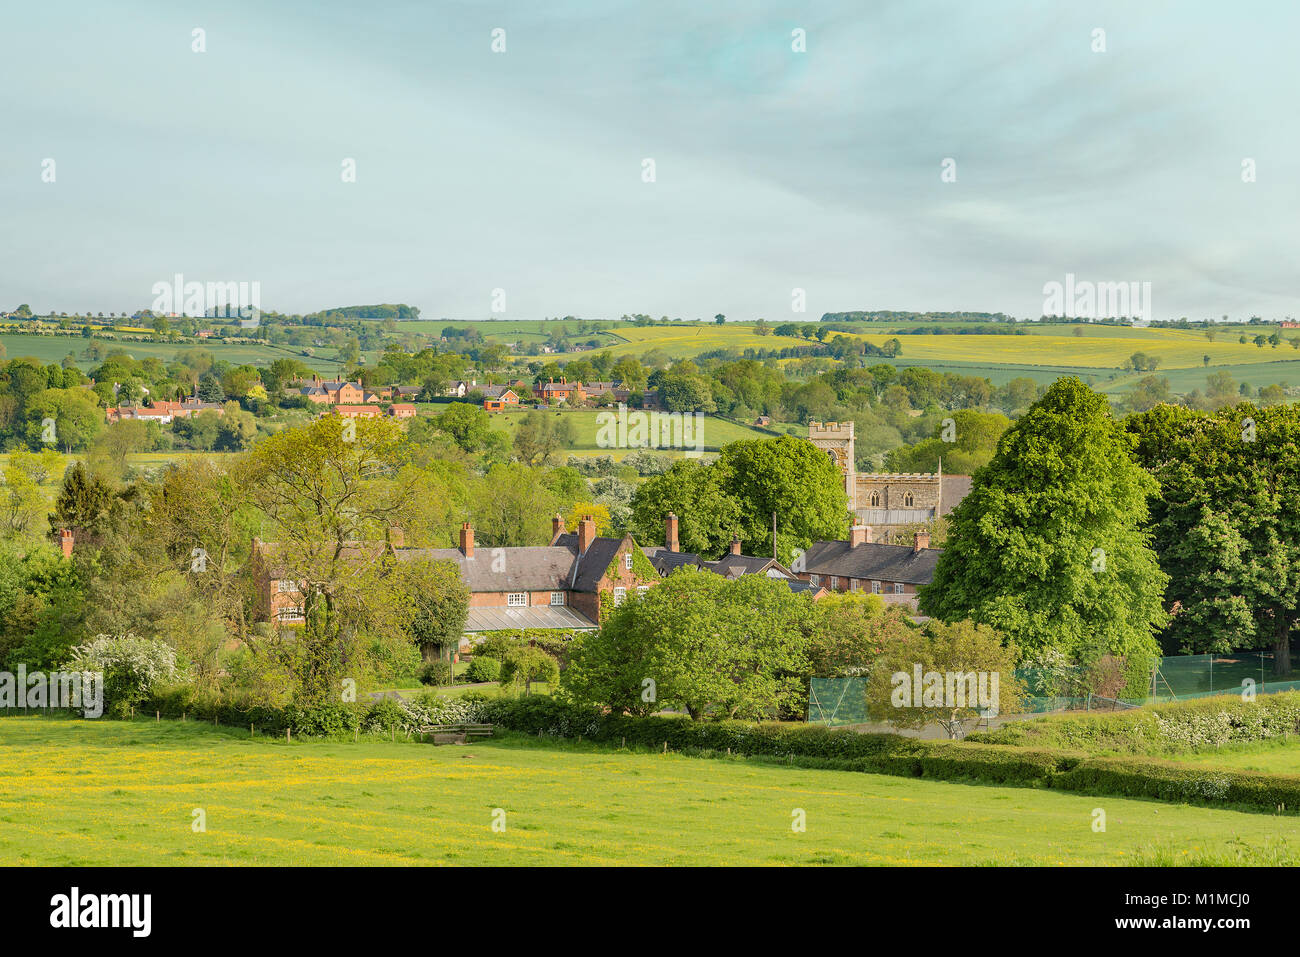 Une image montrant une section du petit village paisible d'Rotherby, Leicestershire, Angleterre, Royaume-Uni. Banque D'Images